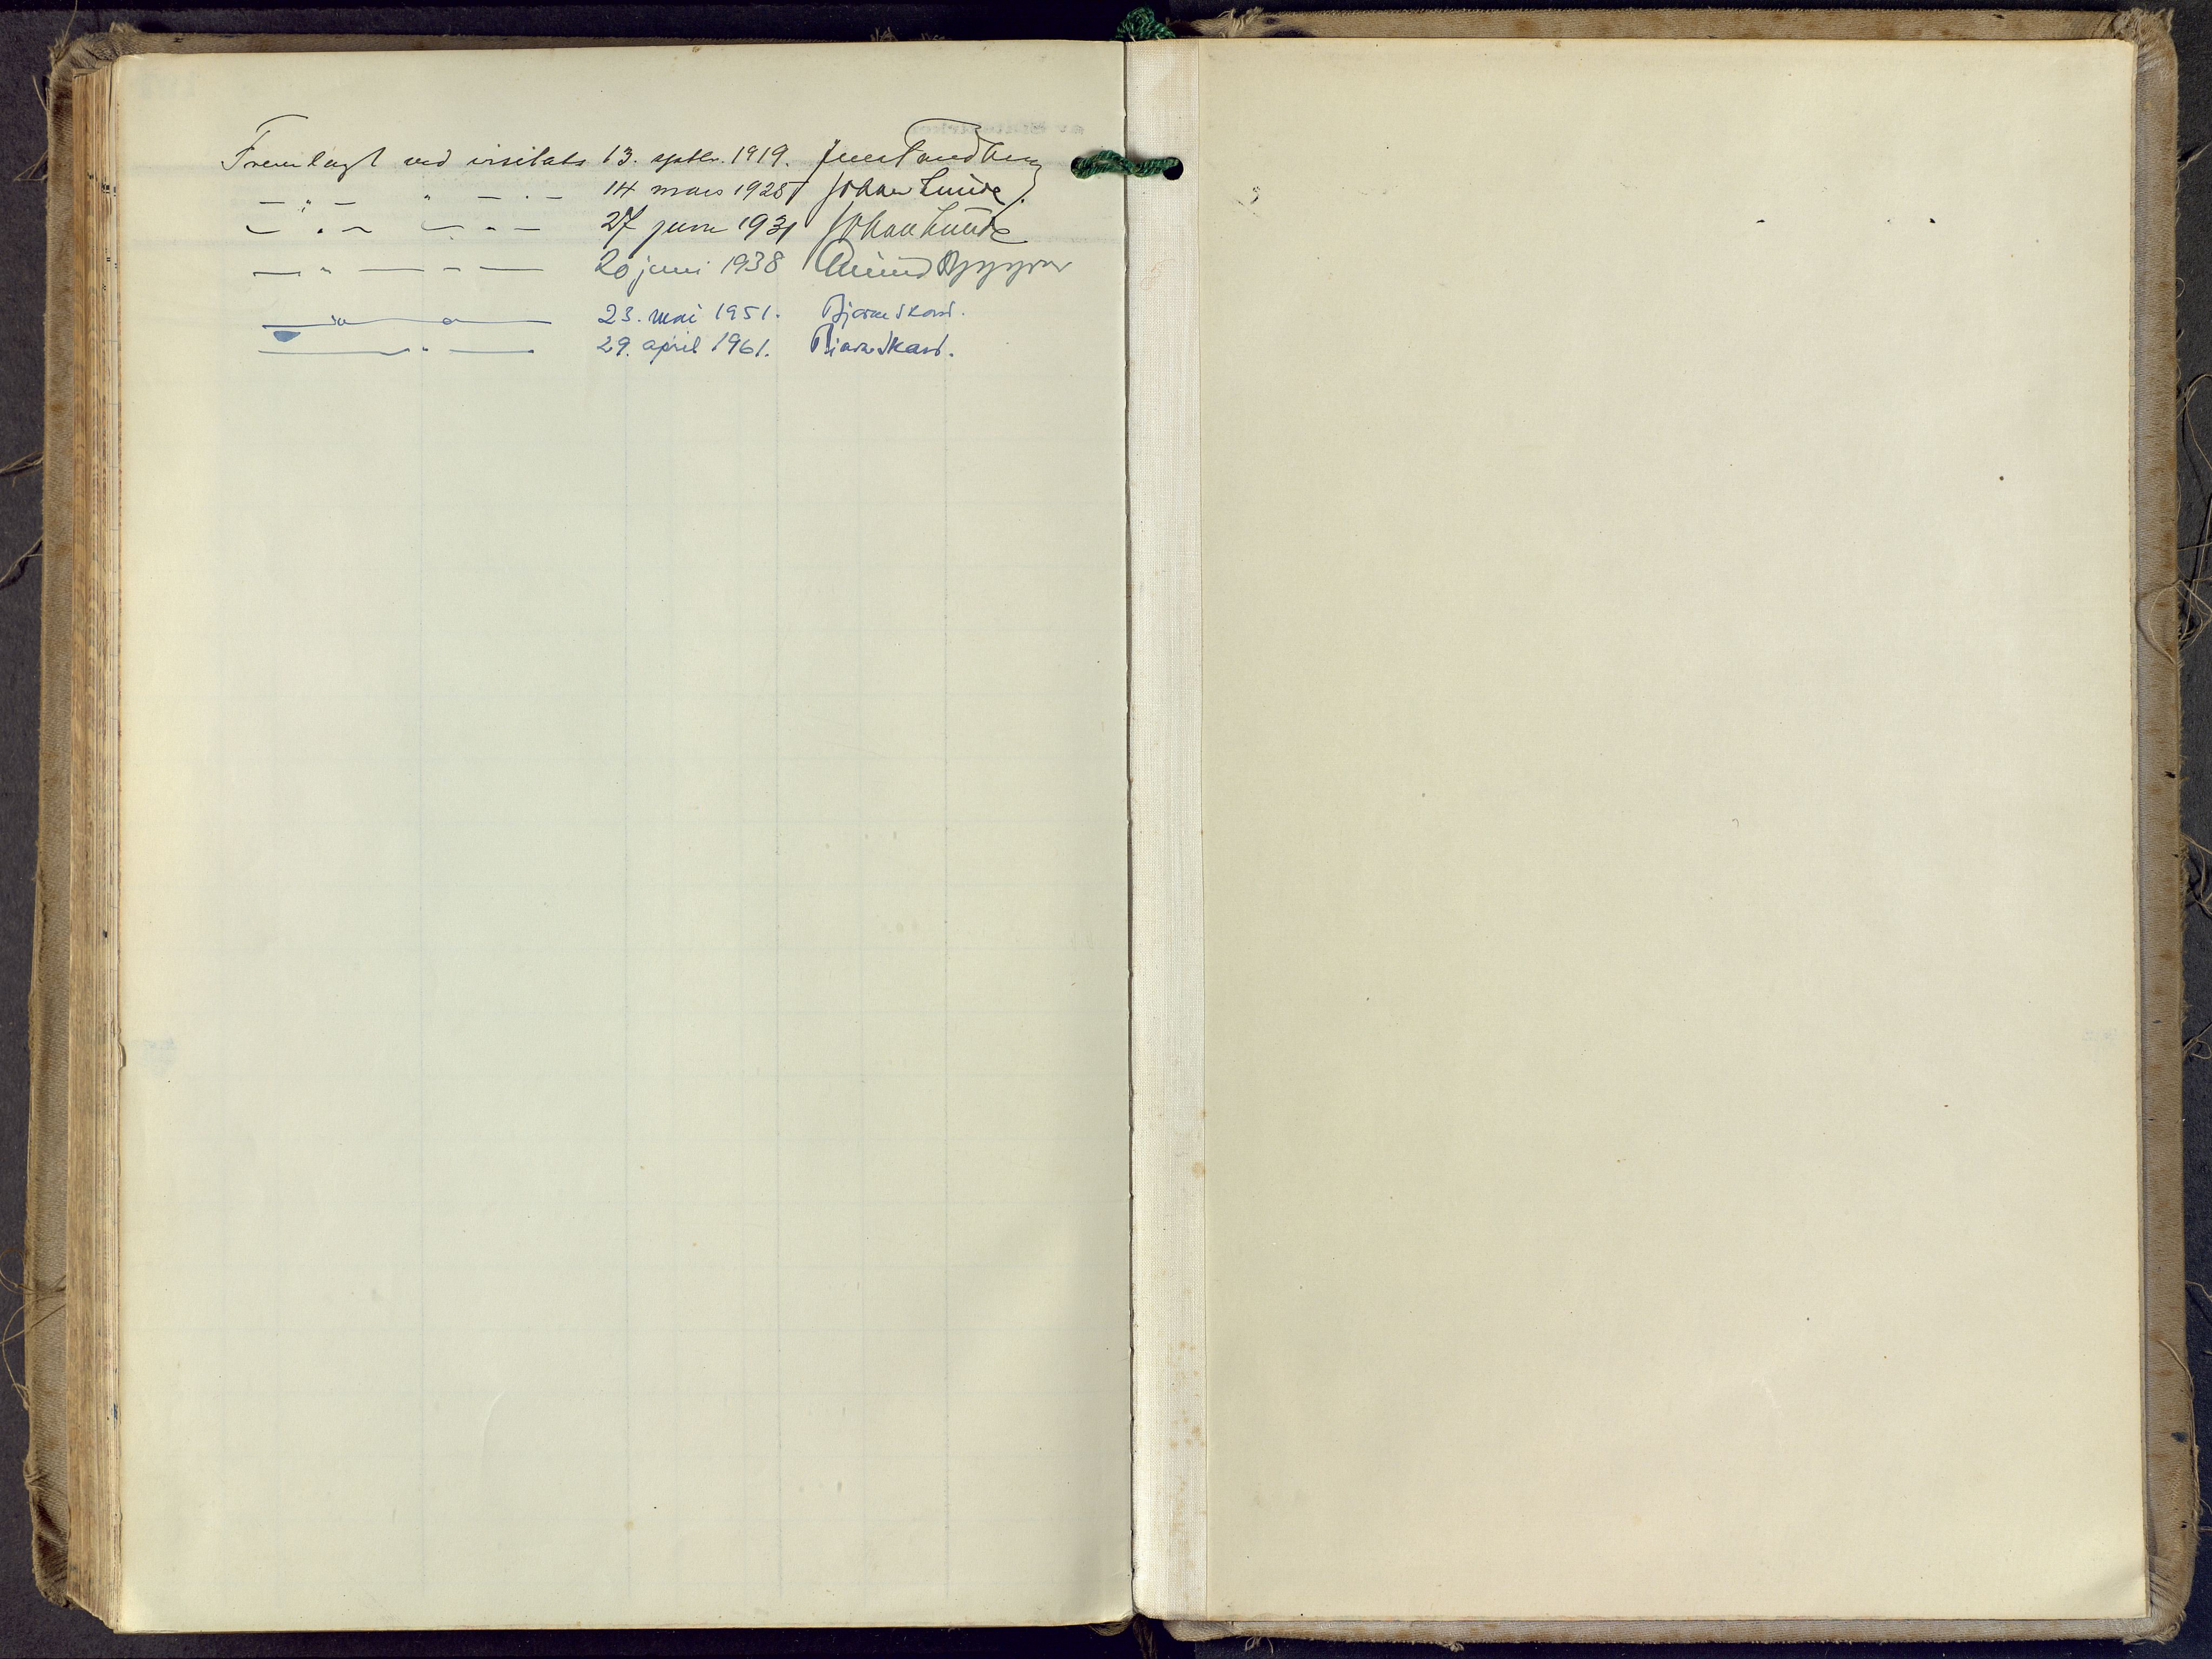 Brunlanes kirkebøker, SAKO/A-342/F/Fd/L0002: Ministerialbok nr. IV 2, 1918-1958